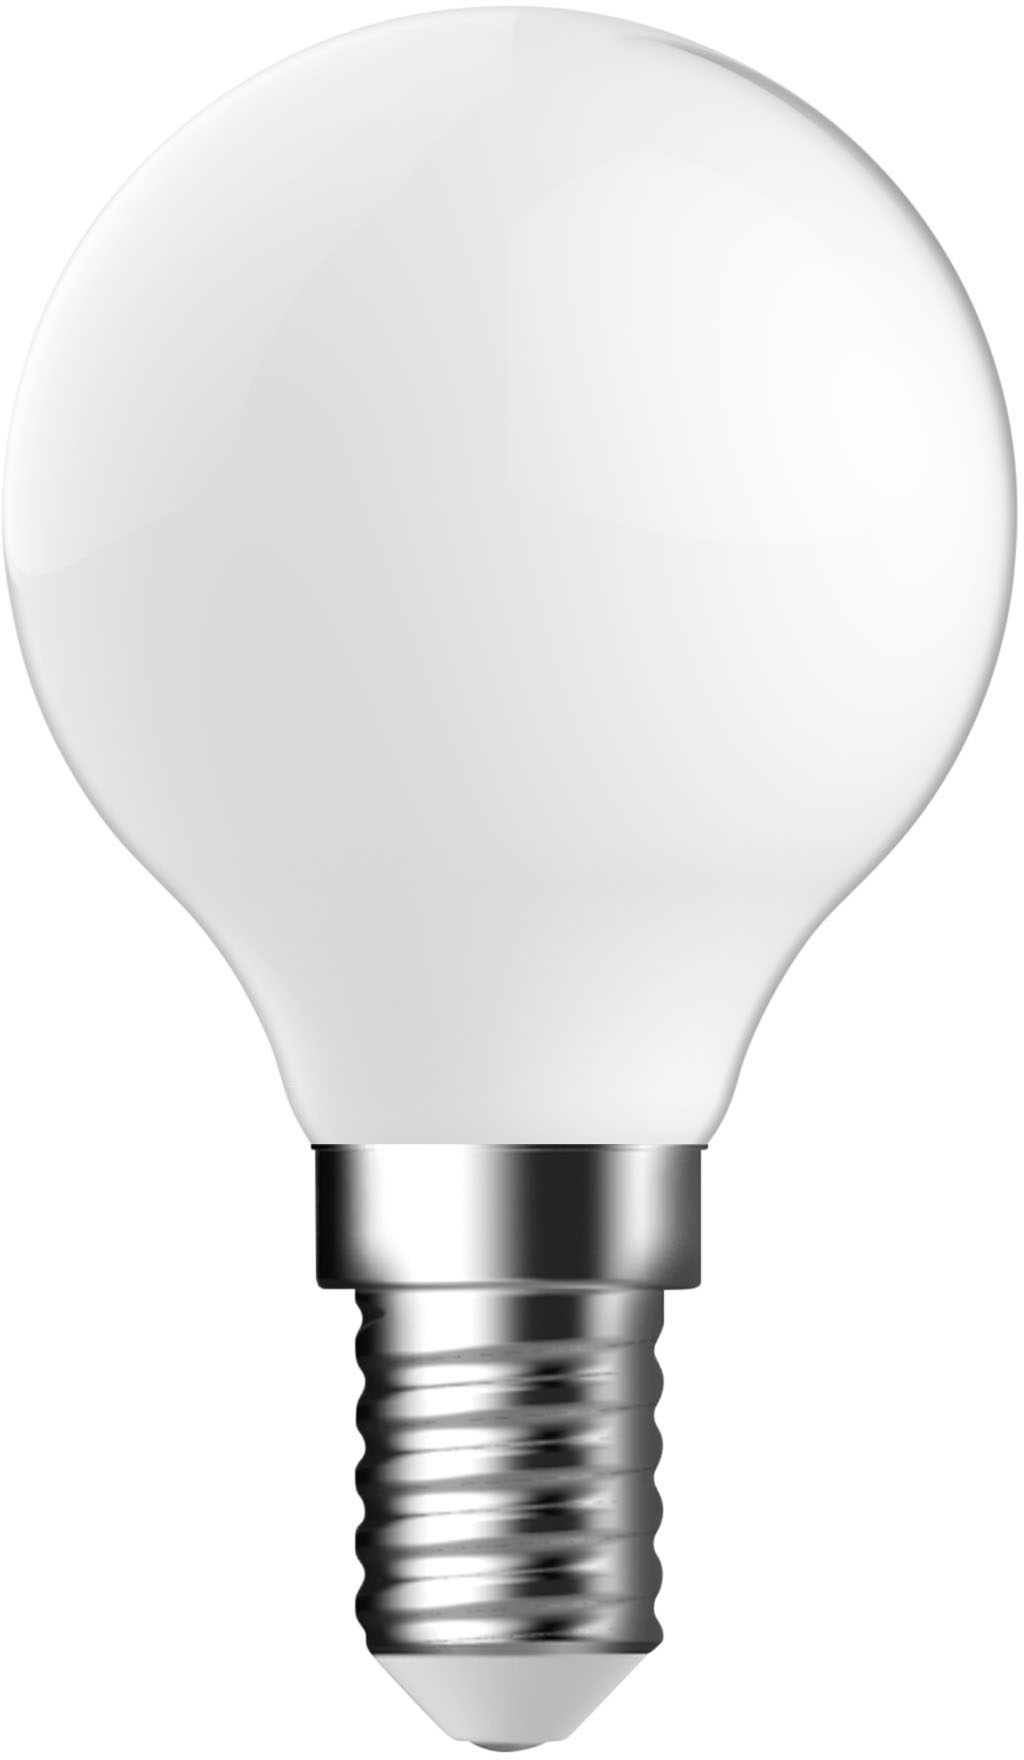 LED-Leuchtmittel »Paere«, 6 St., Set mit 6 Stück, je 2,5 Watt